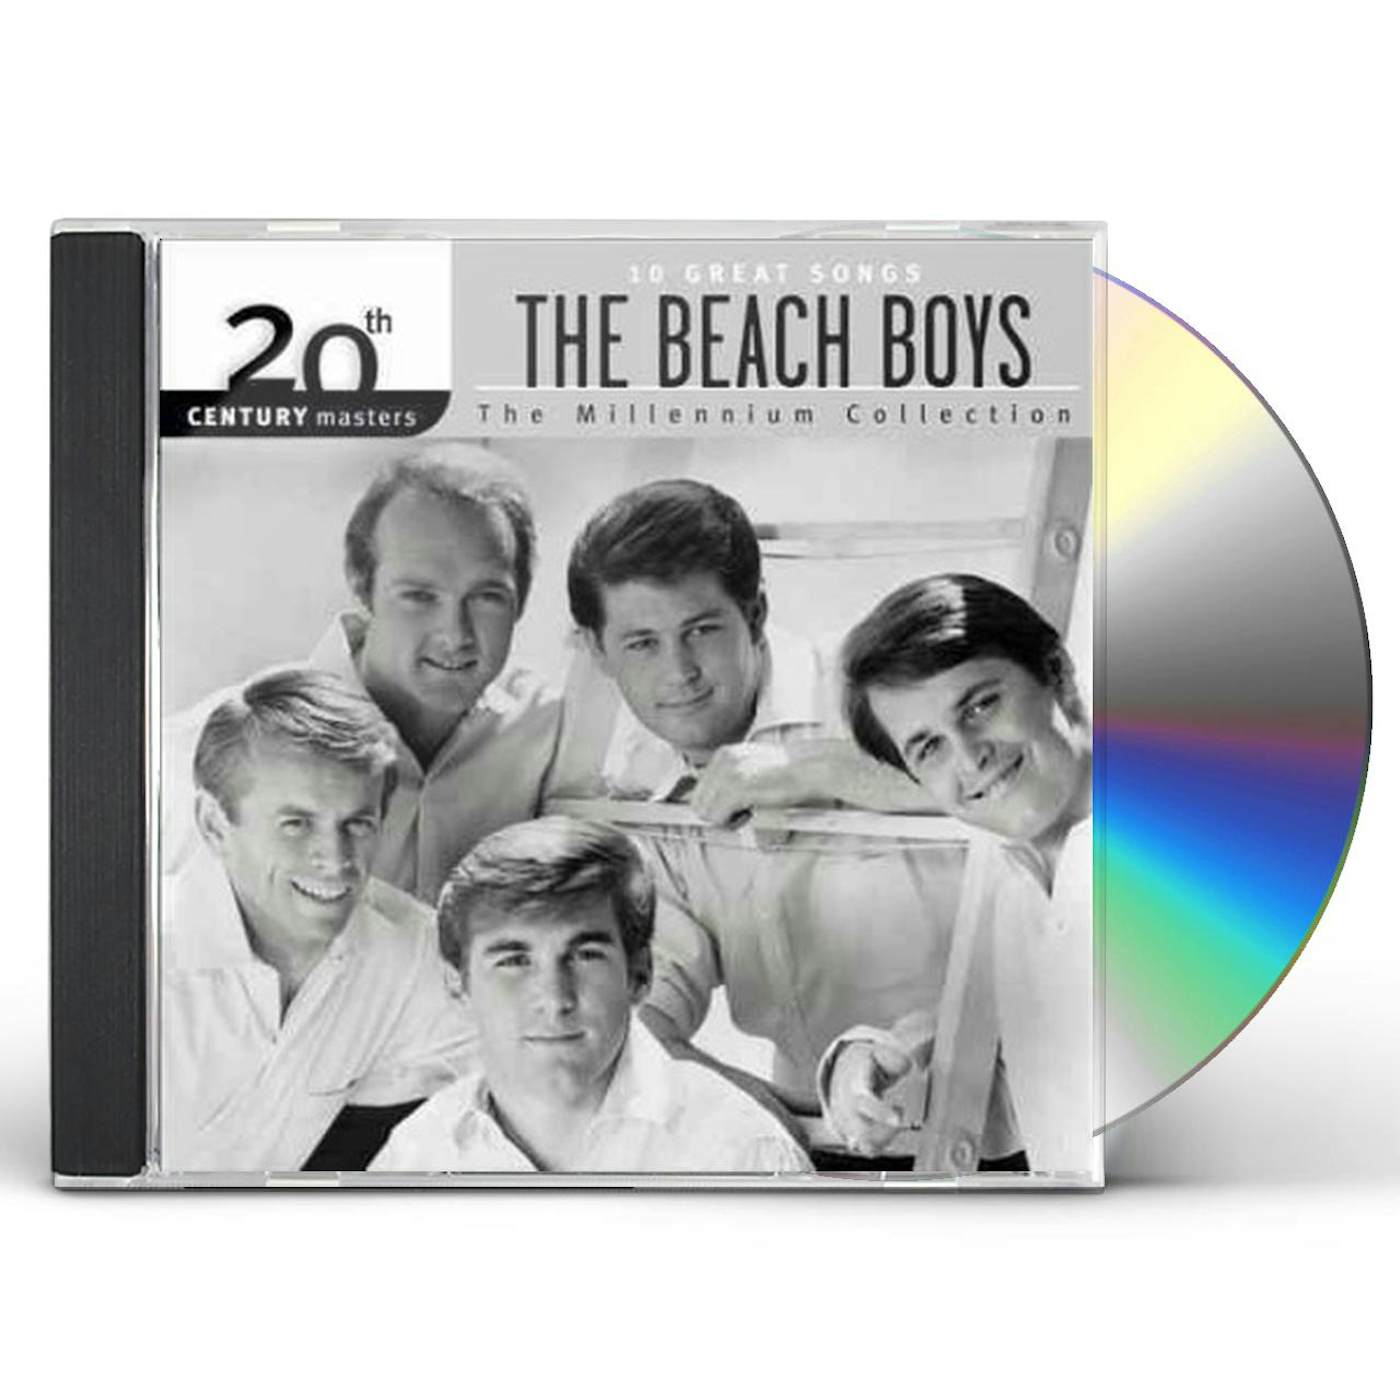 The Beach Boys MILLENNIUM COLLECTION: 20TH CENTURY MASTERS CD